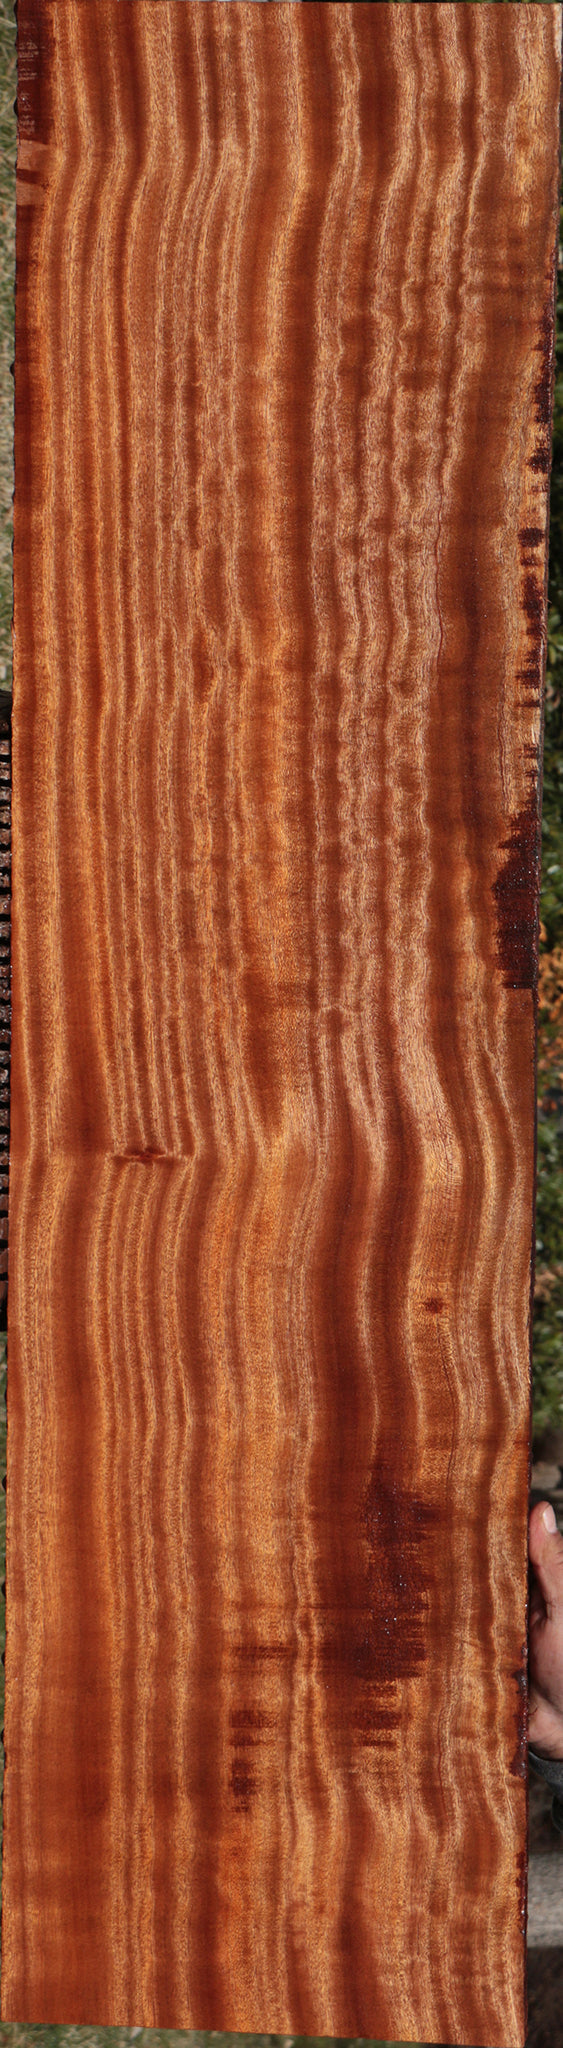 Extra Fancy Quartersawn Sapele Lumber